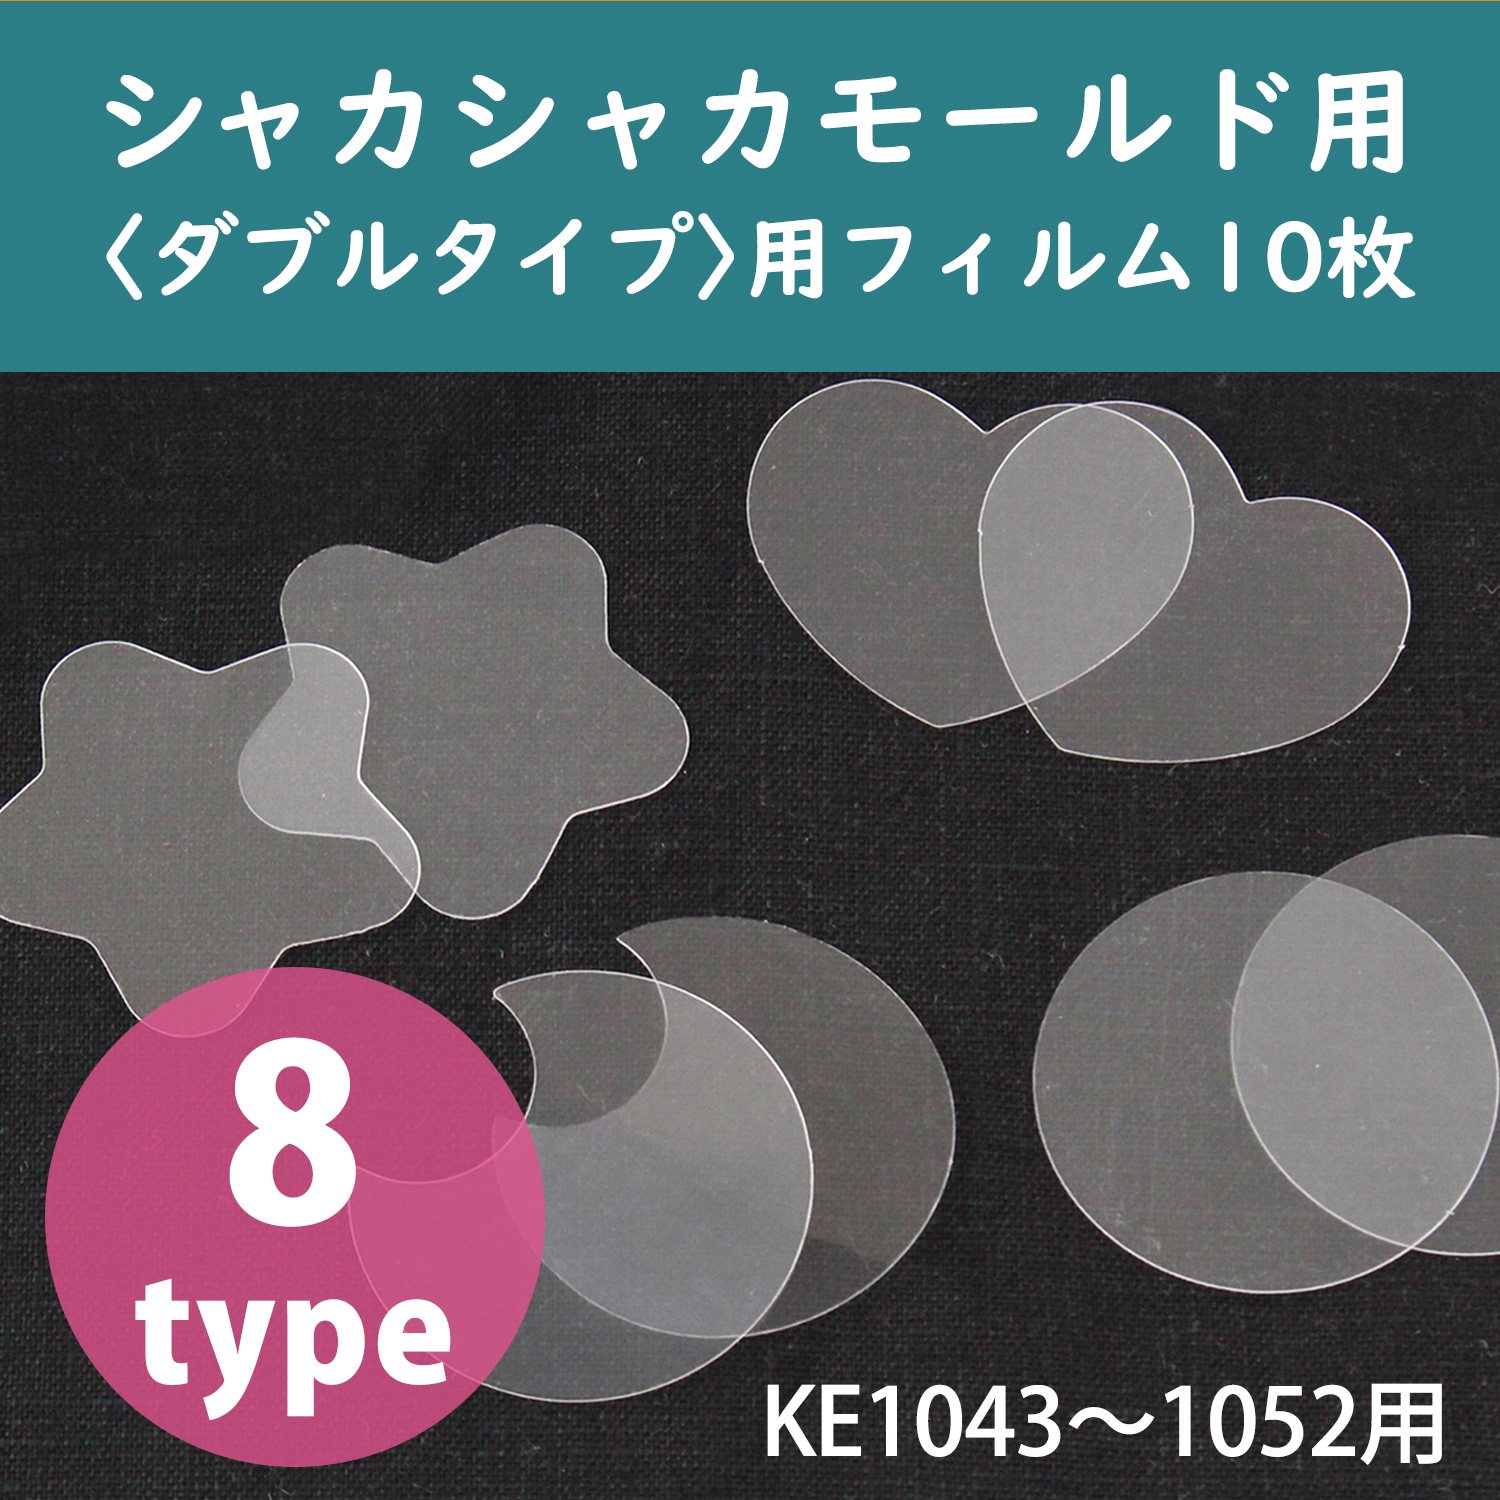 KE1045～1059 〈ダブルタイプ〉シャカシャカモールド用 透明フィルム 10枚入 (袋)